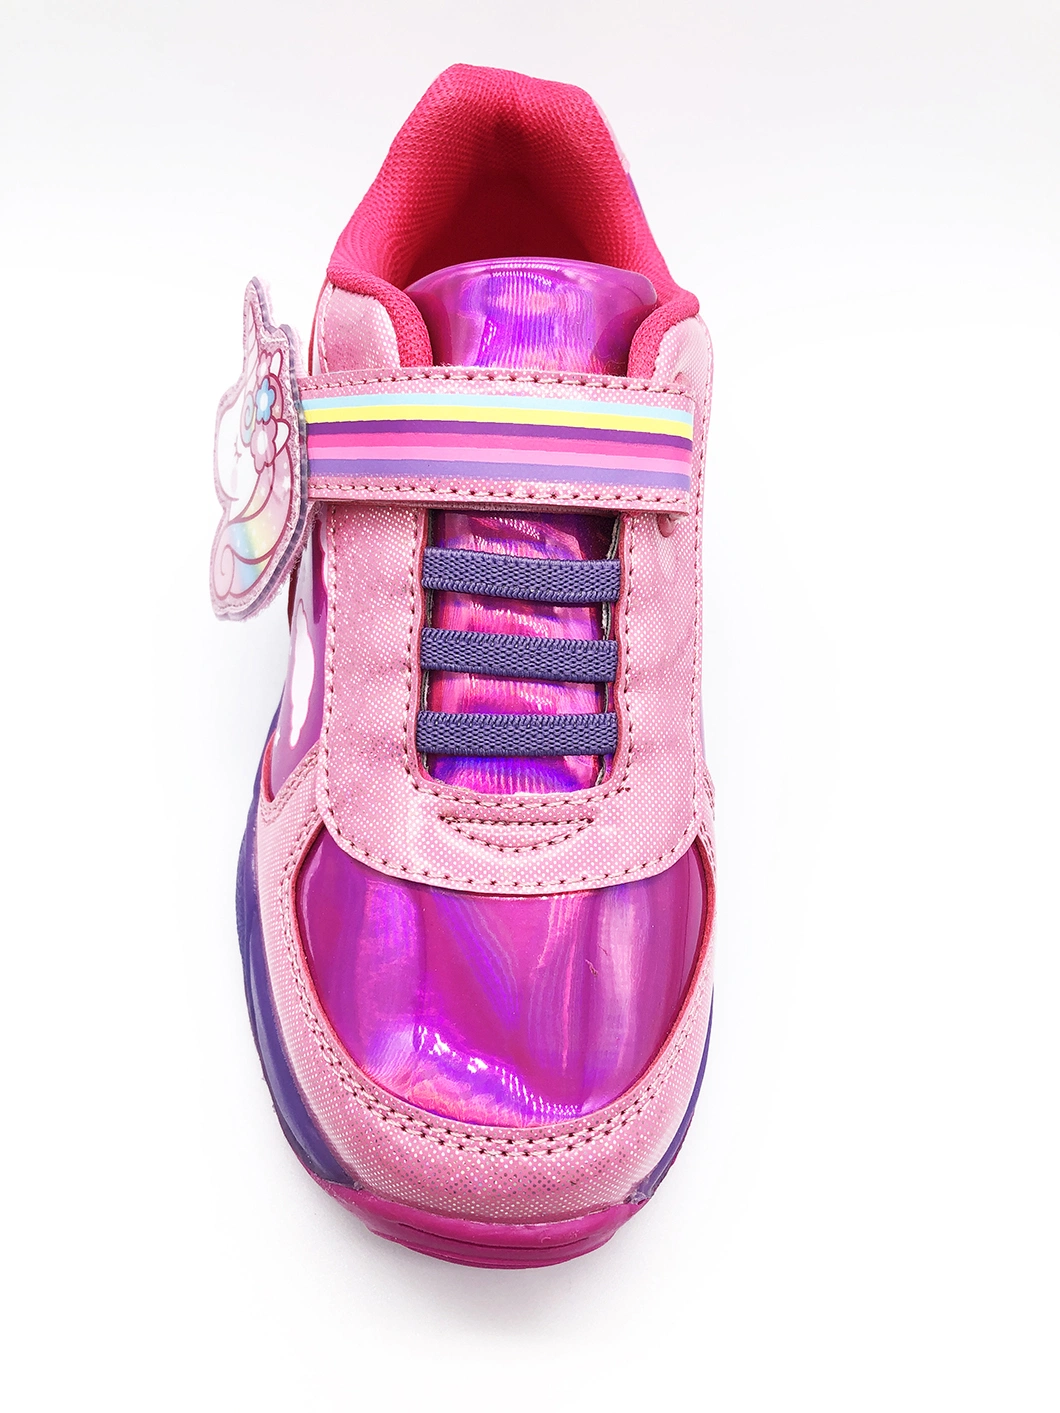 Kids Spring Pulley Shoes Light up LED Sports Shoes for Girls Children Roller Skate